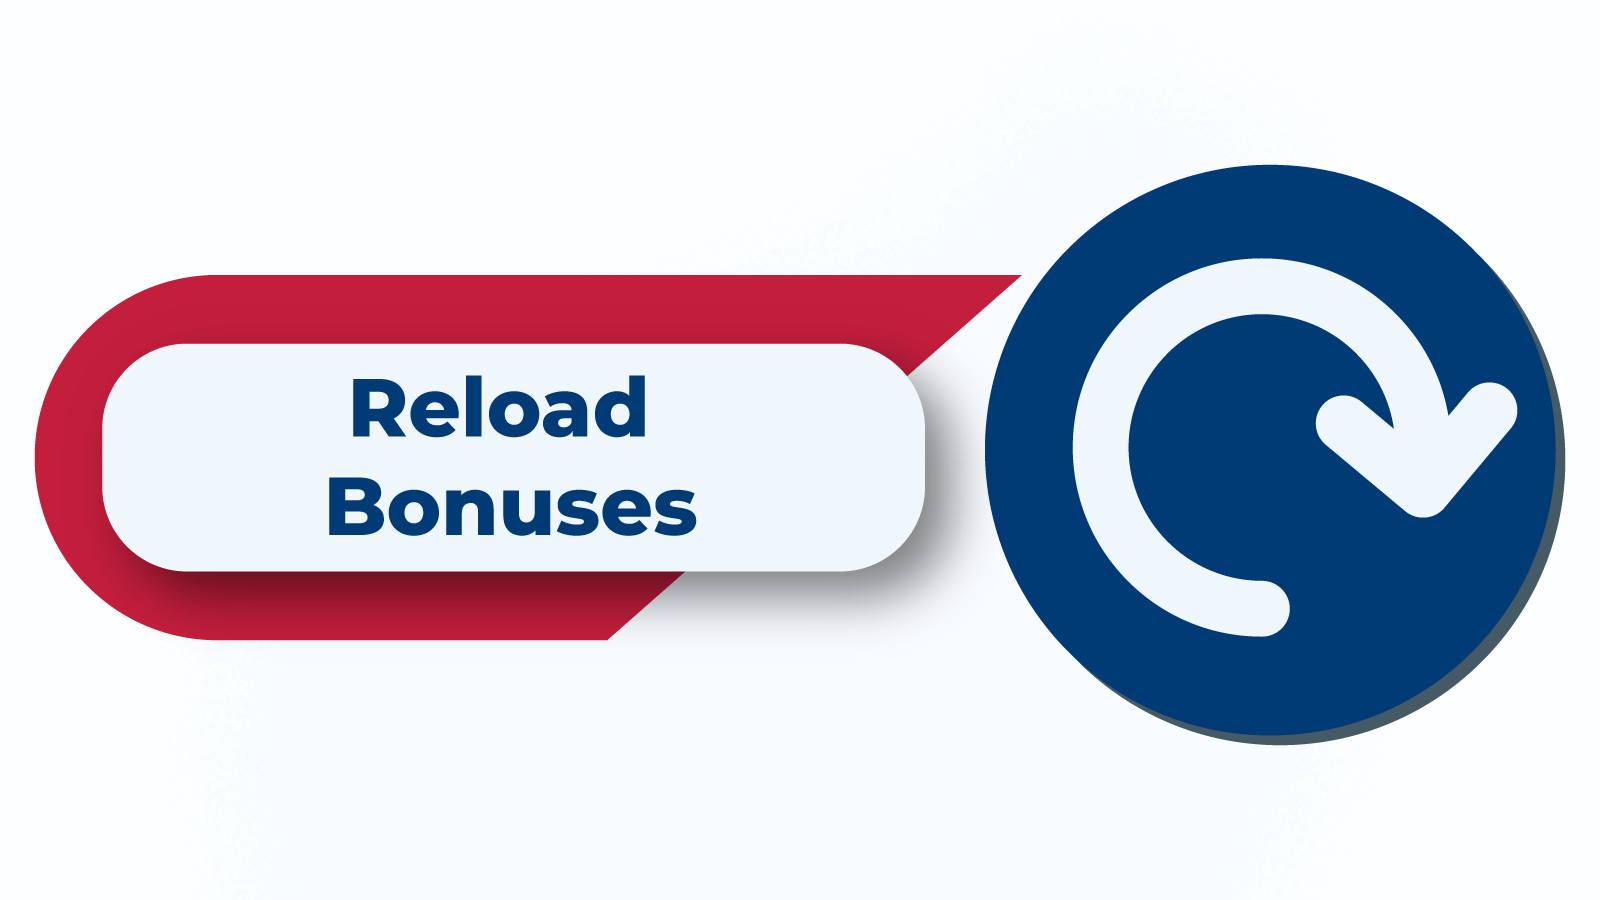 Reload Bonuses